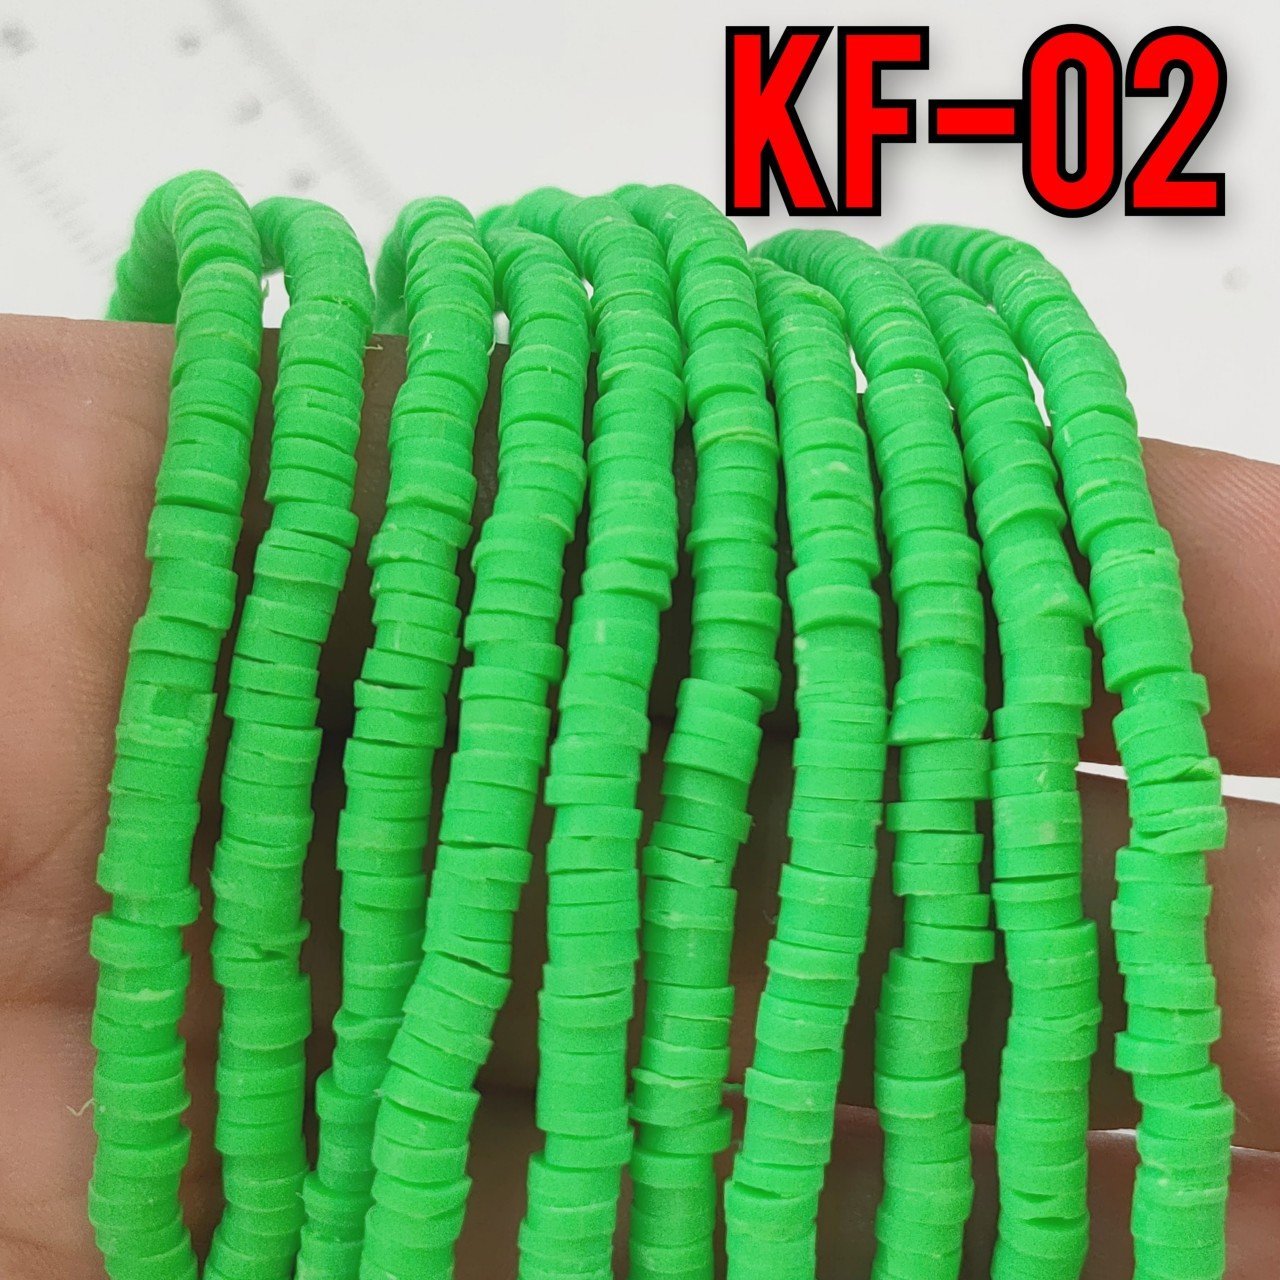 KF-02 Yeşil Renk Fimo Boncuk 4 mm